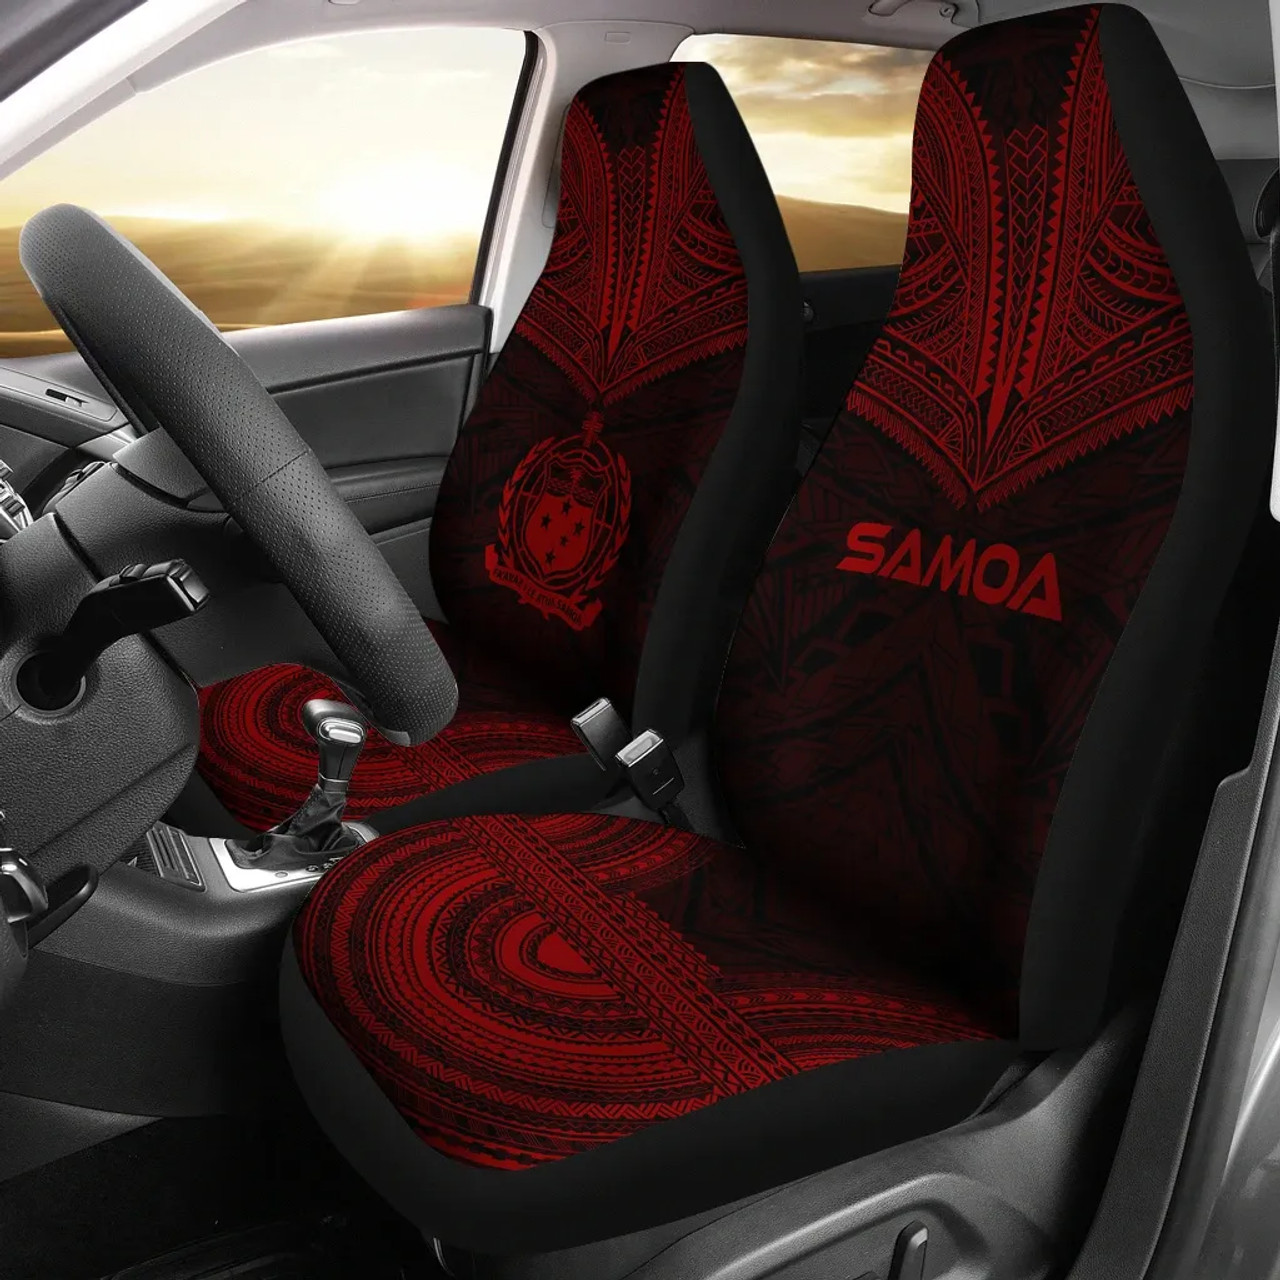 Samoa Car Seat Cover - Samoa Coat Of Arms Polynesian Chief Tattoo Deep Red Version